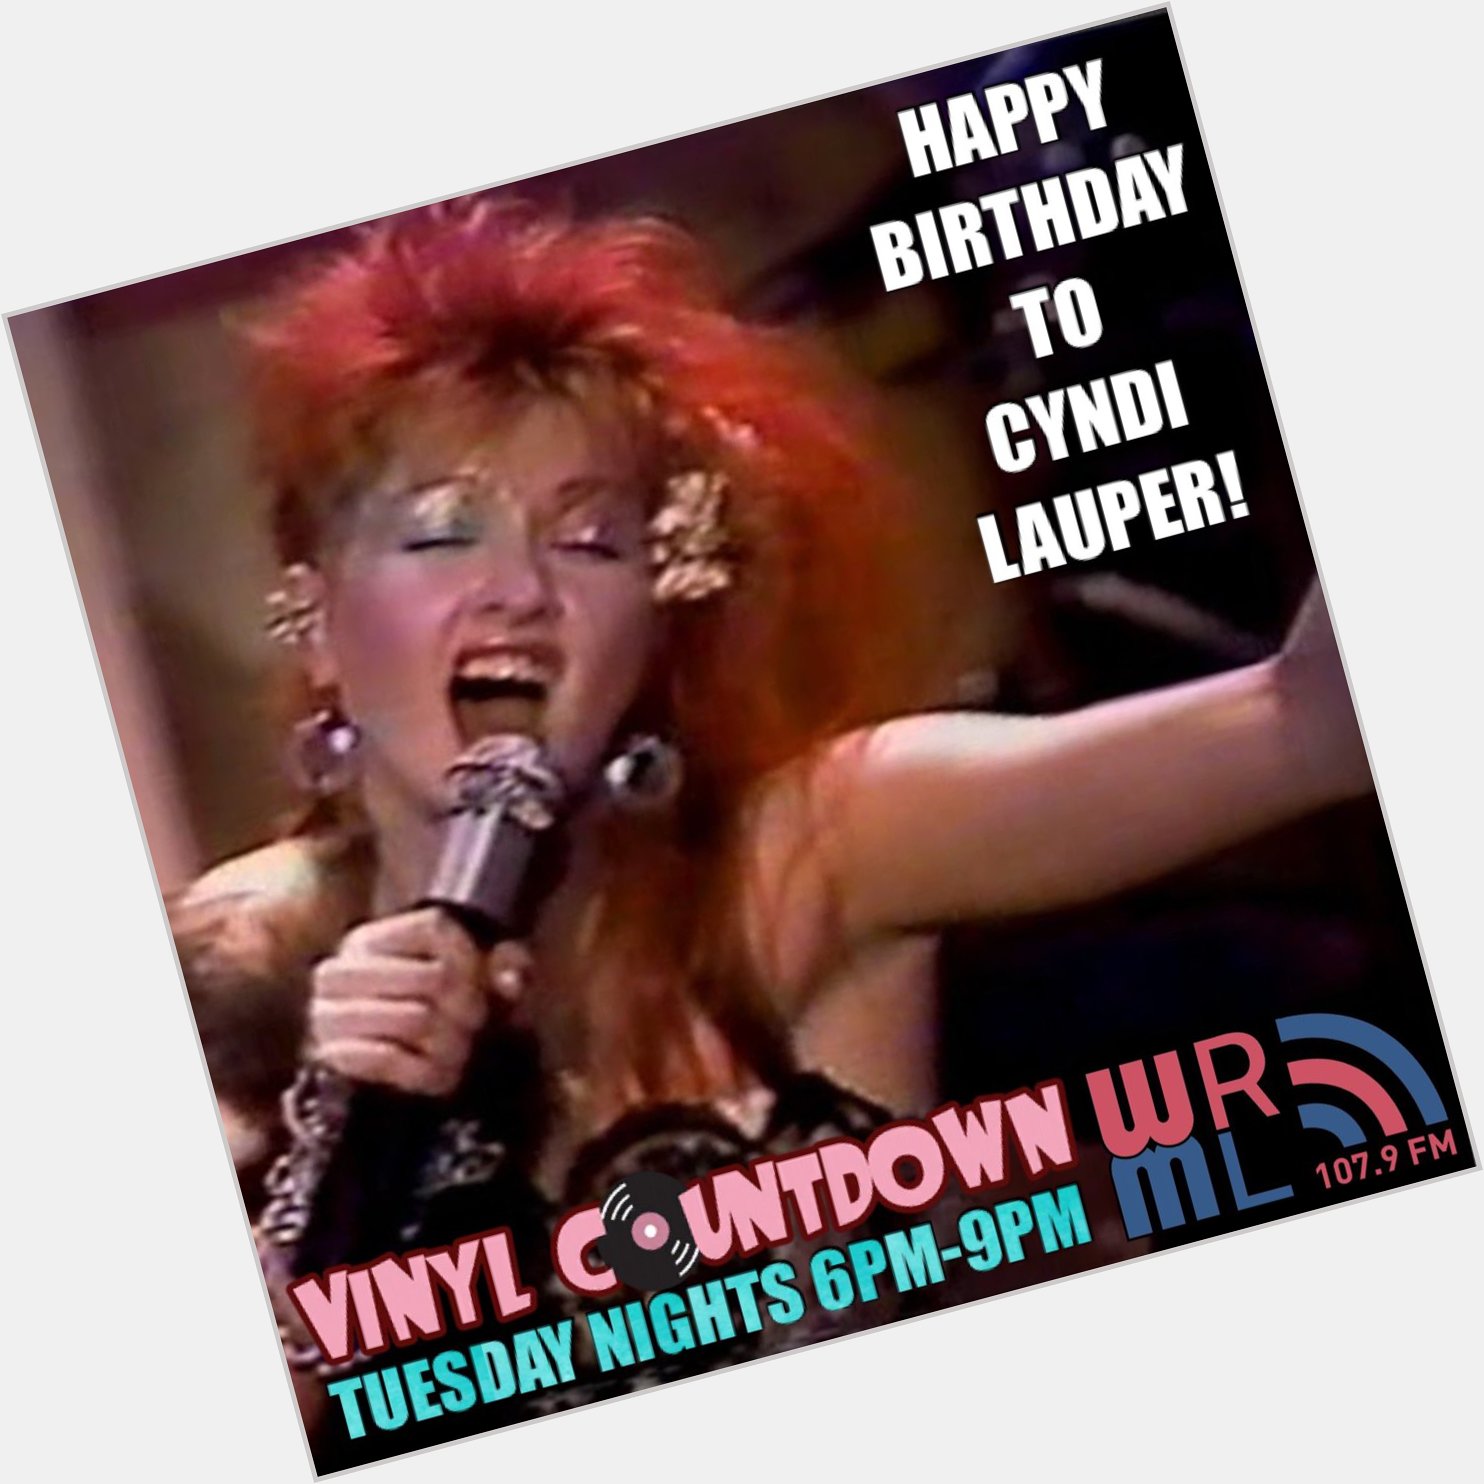 Happy 66th birthday to the unusual one herself, Cyndi Lauper! 